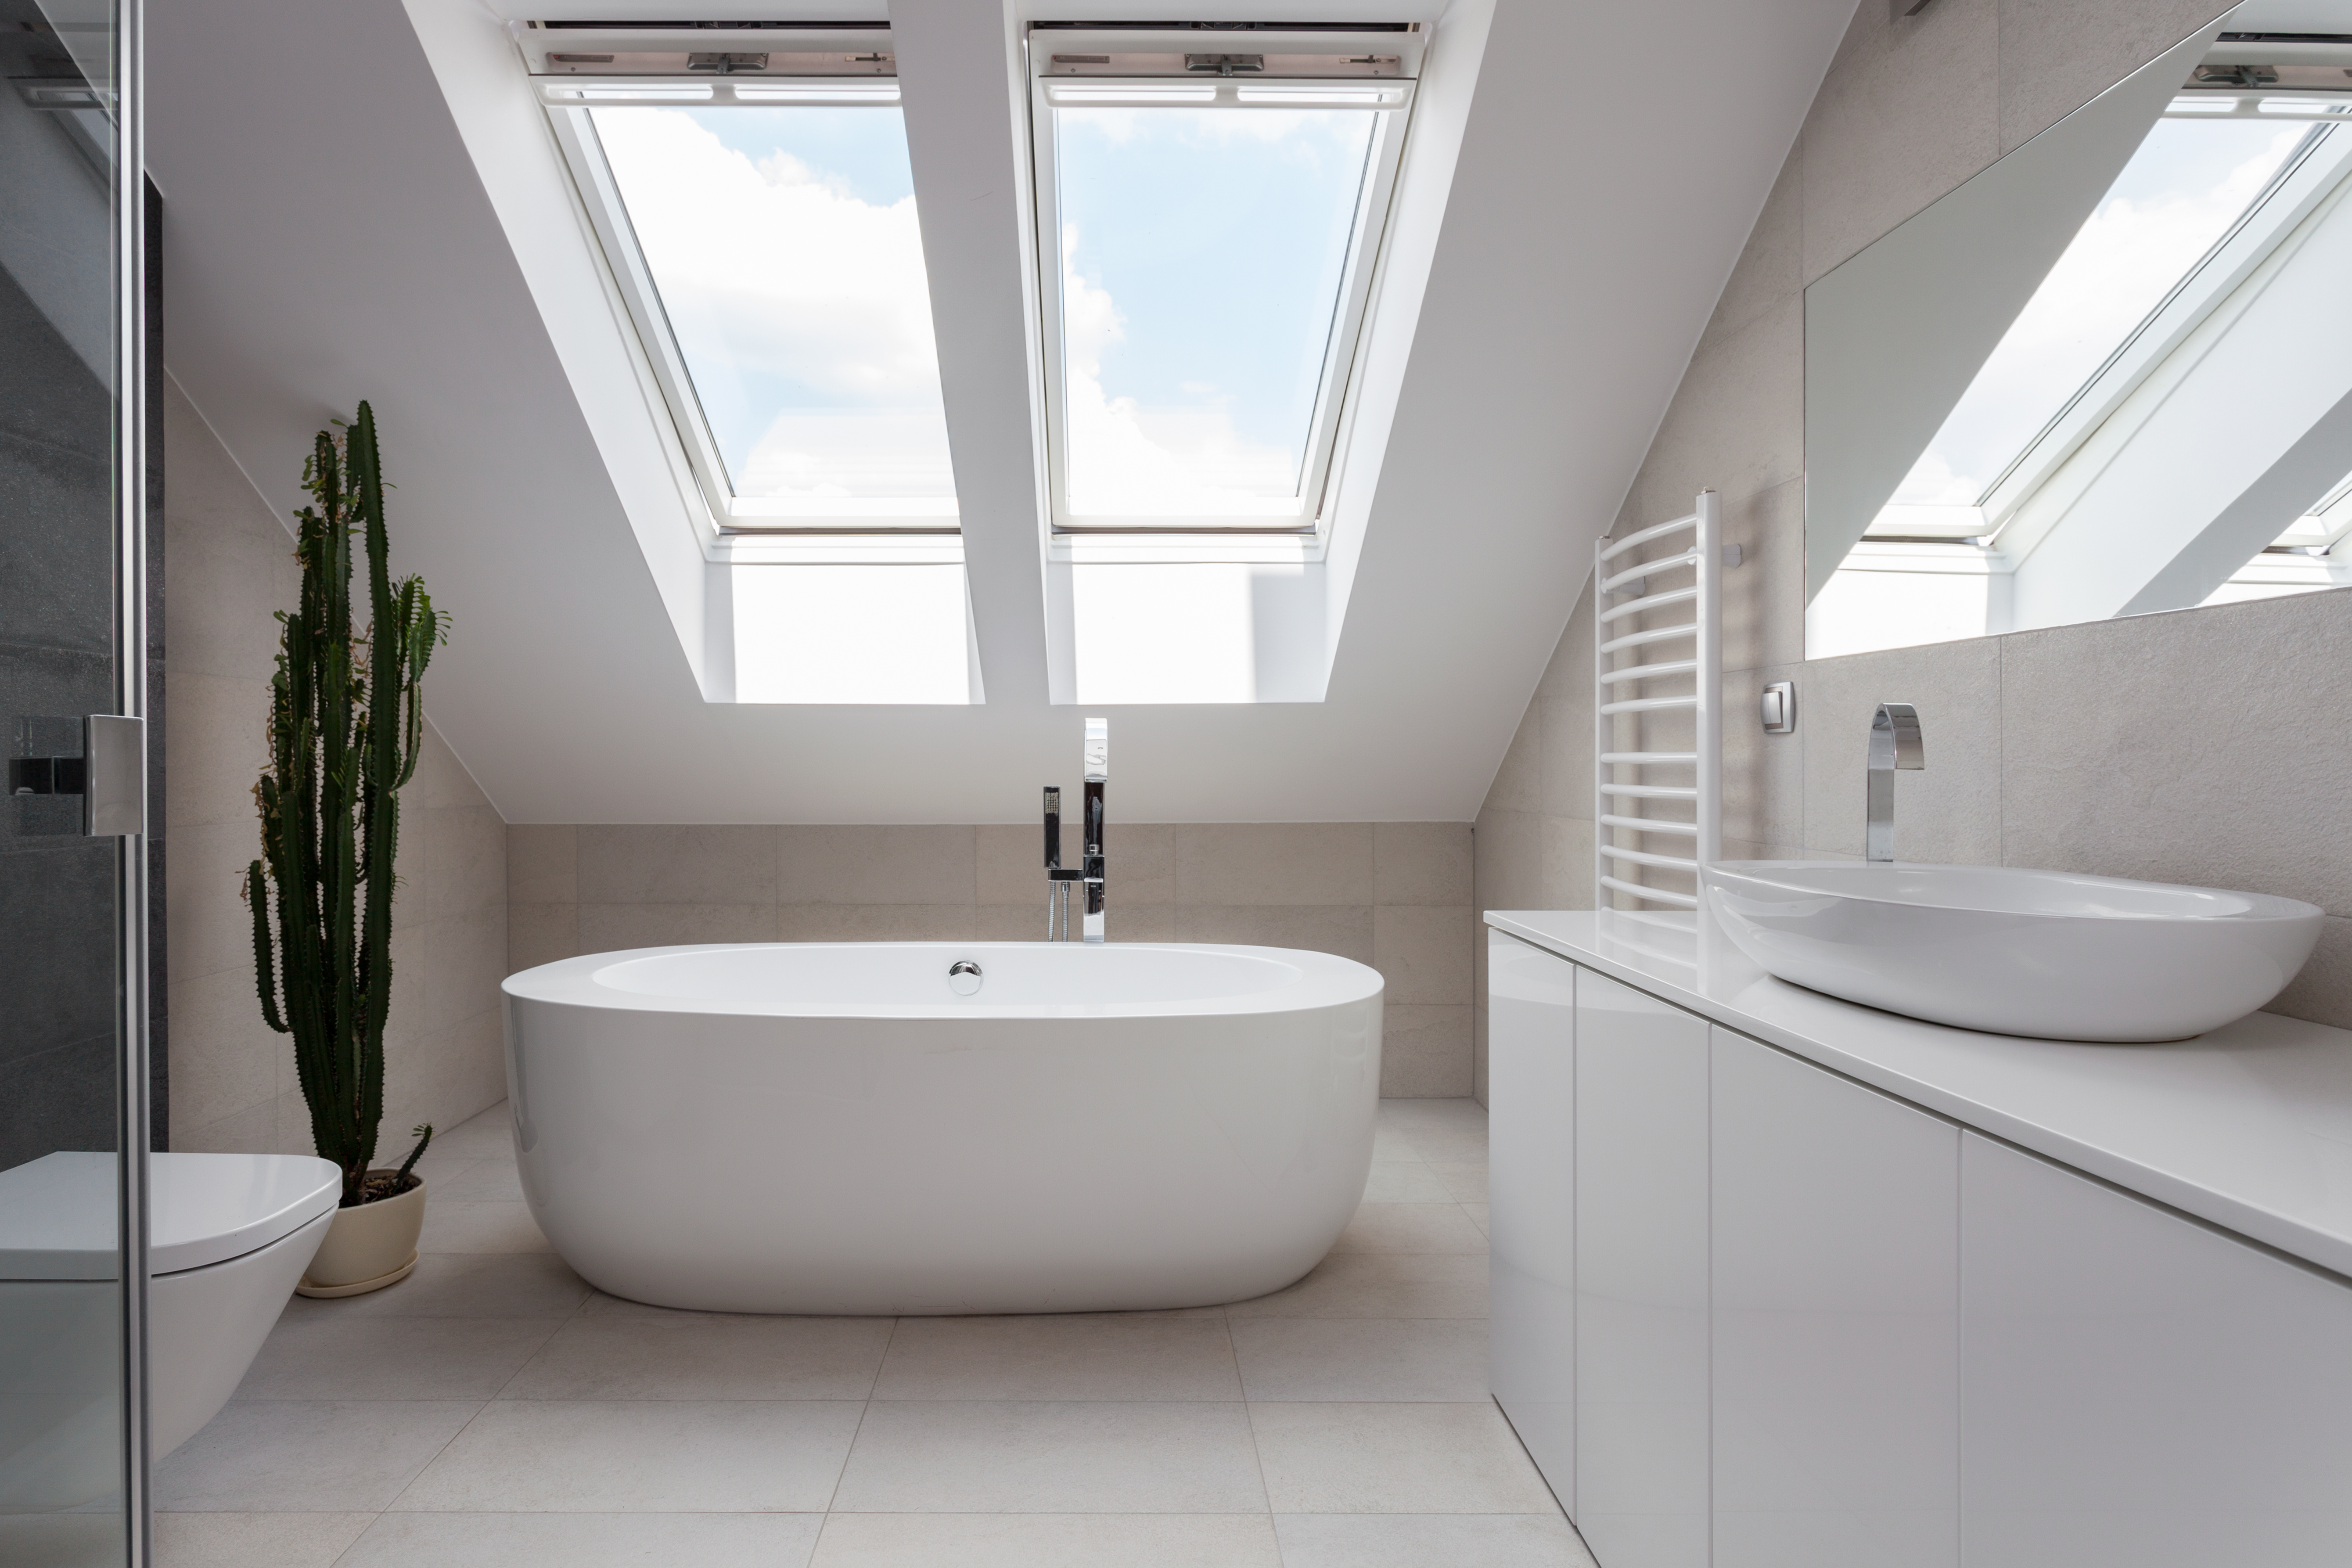 Bathroom skylight